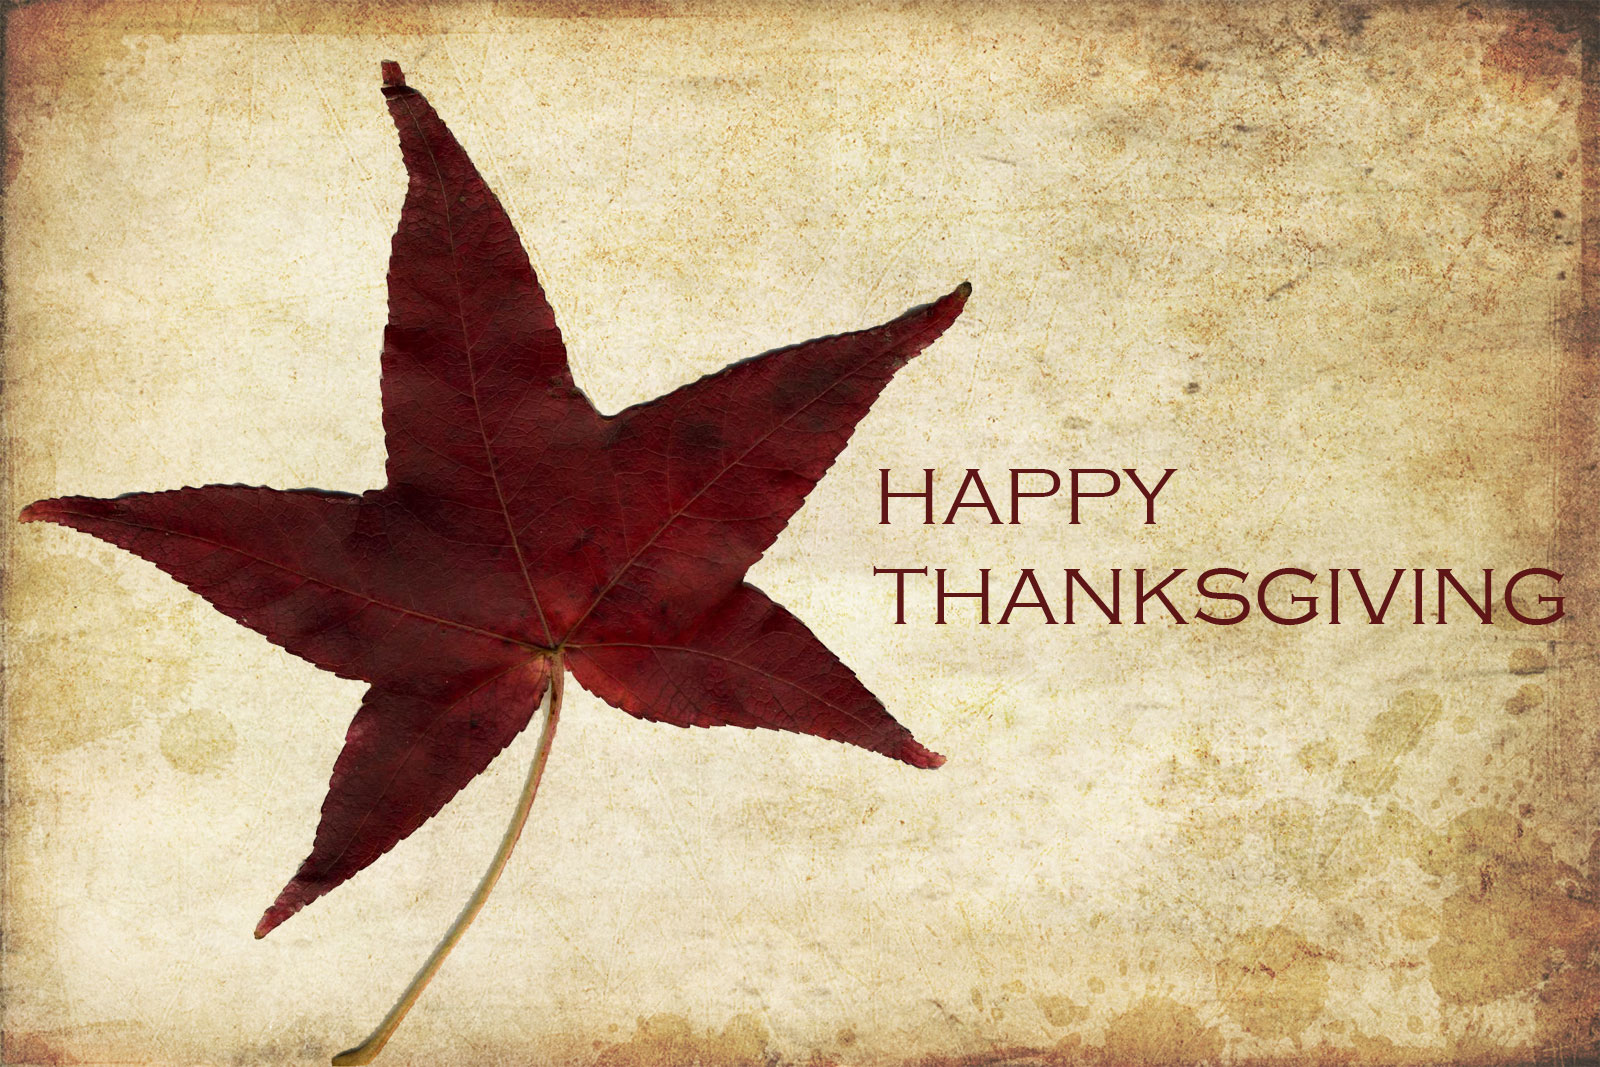 Happy Thanksgiving Day 2013 HD Wallpapers & Facebook Cover Photos – Designbolts